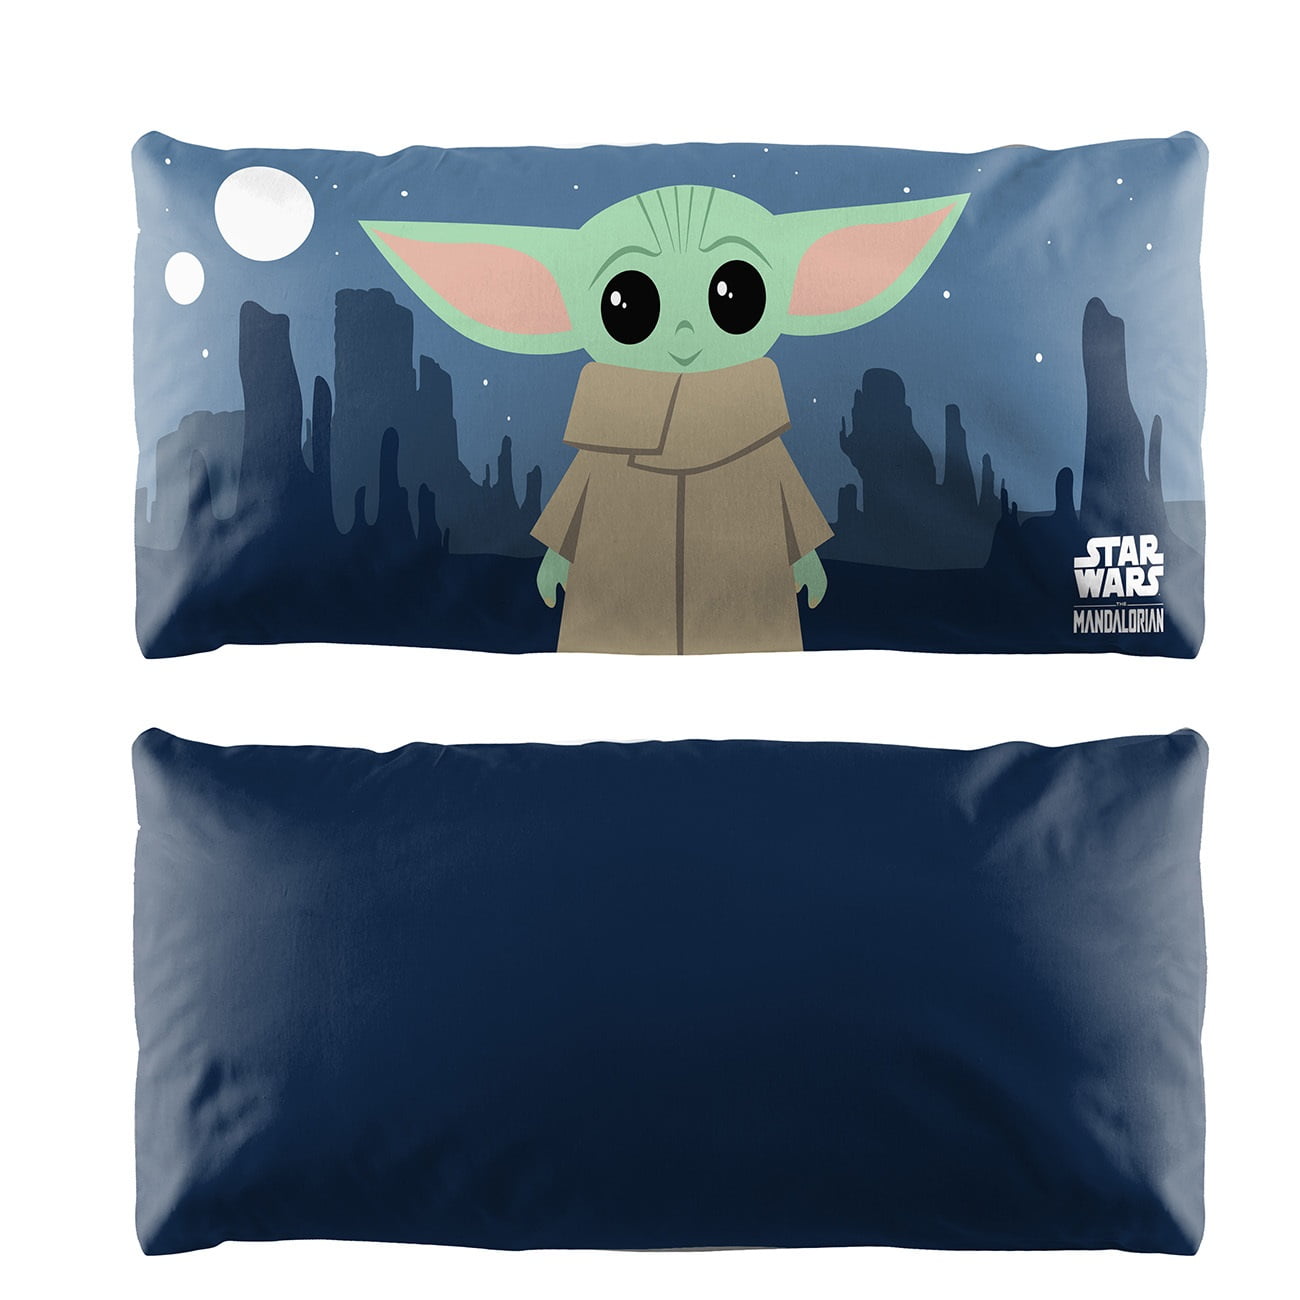 Yoda/Saber Star Wars Pillowcases Pillow Covers 18"x18" 100% Cotton Set of 2 